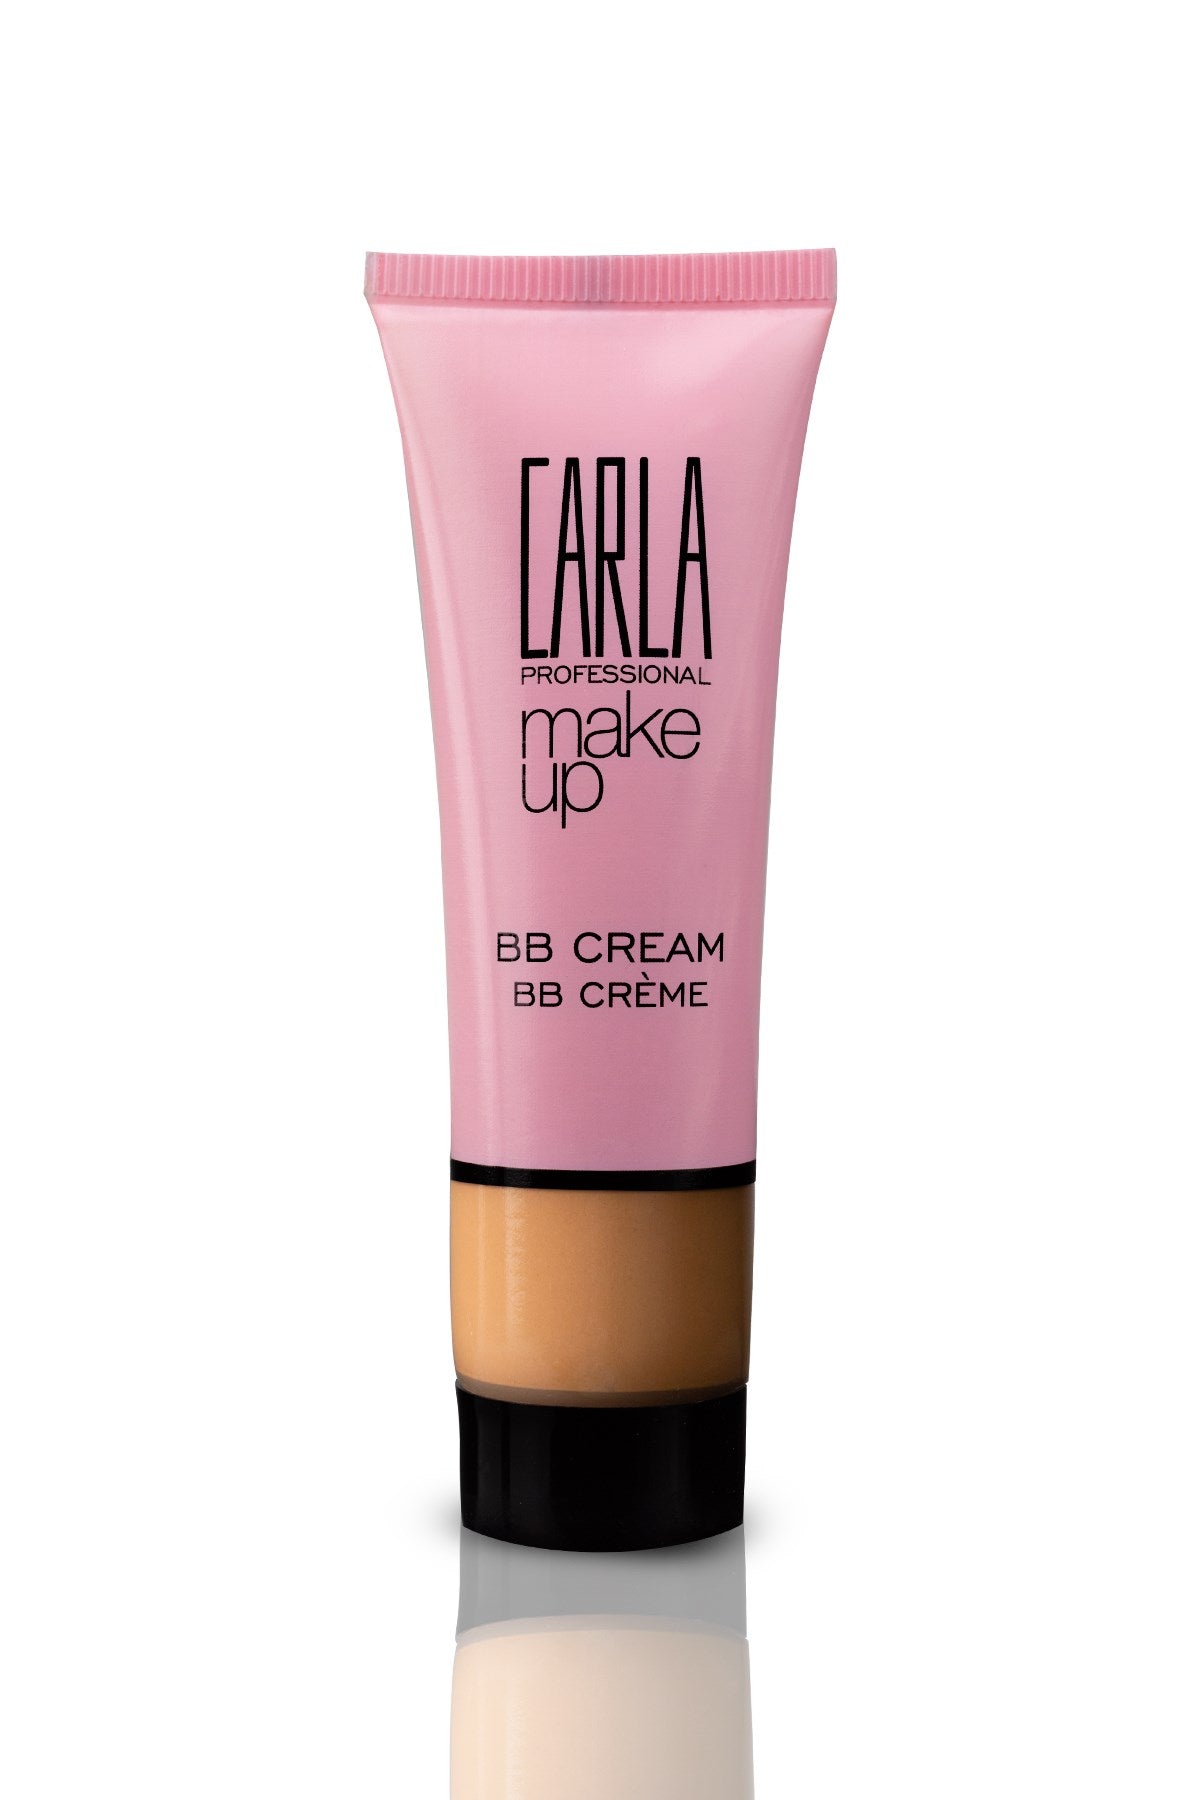 Carla BB Cream - Dark 30ml - Shade No: 54 - Your Path to Smooth, Healthy-Looking Skin